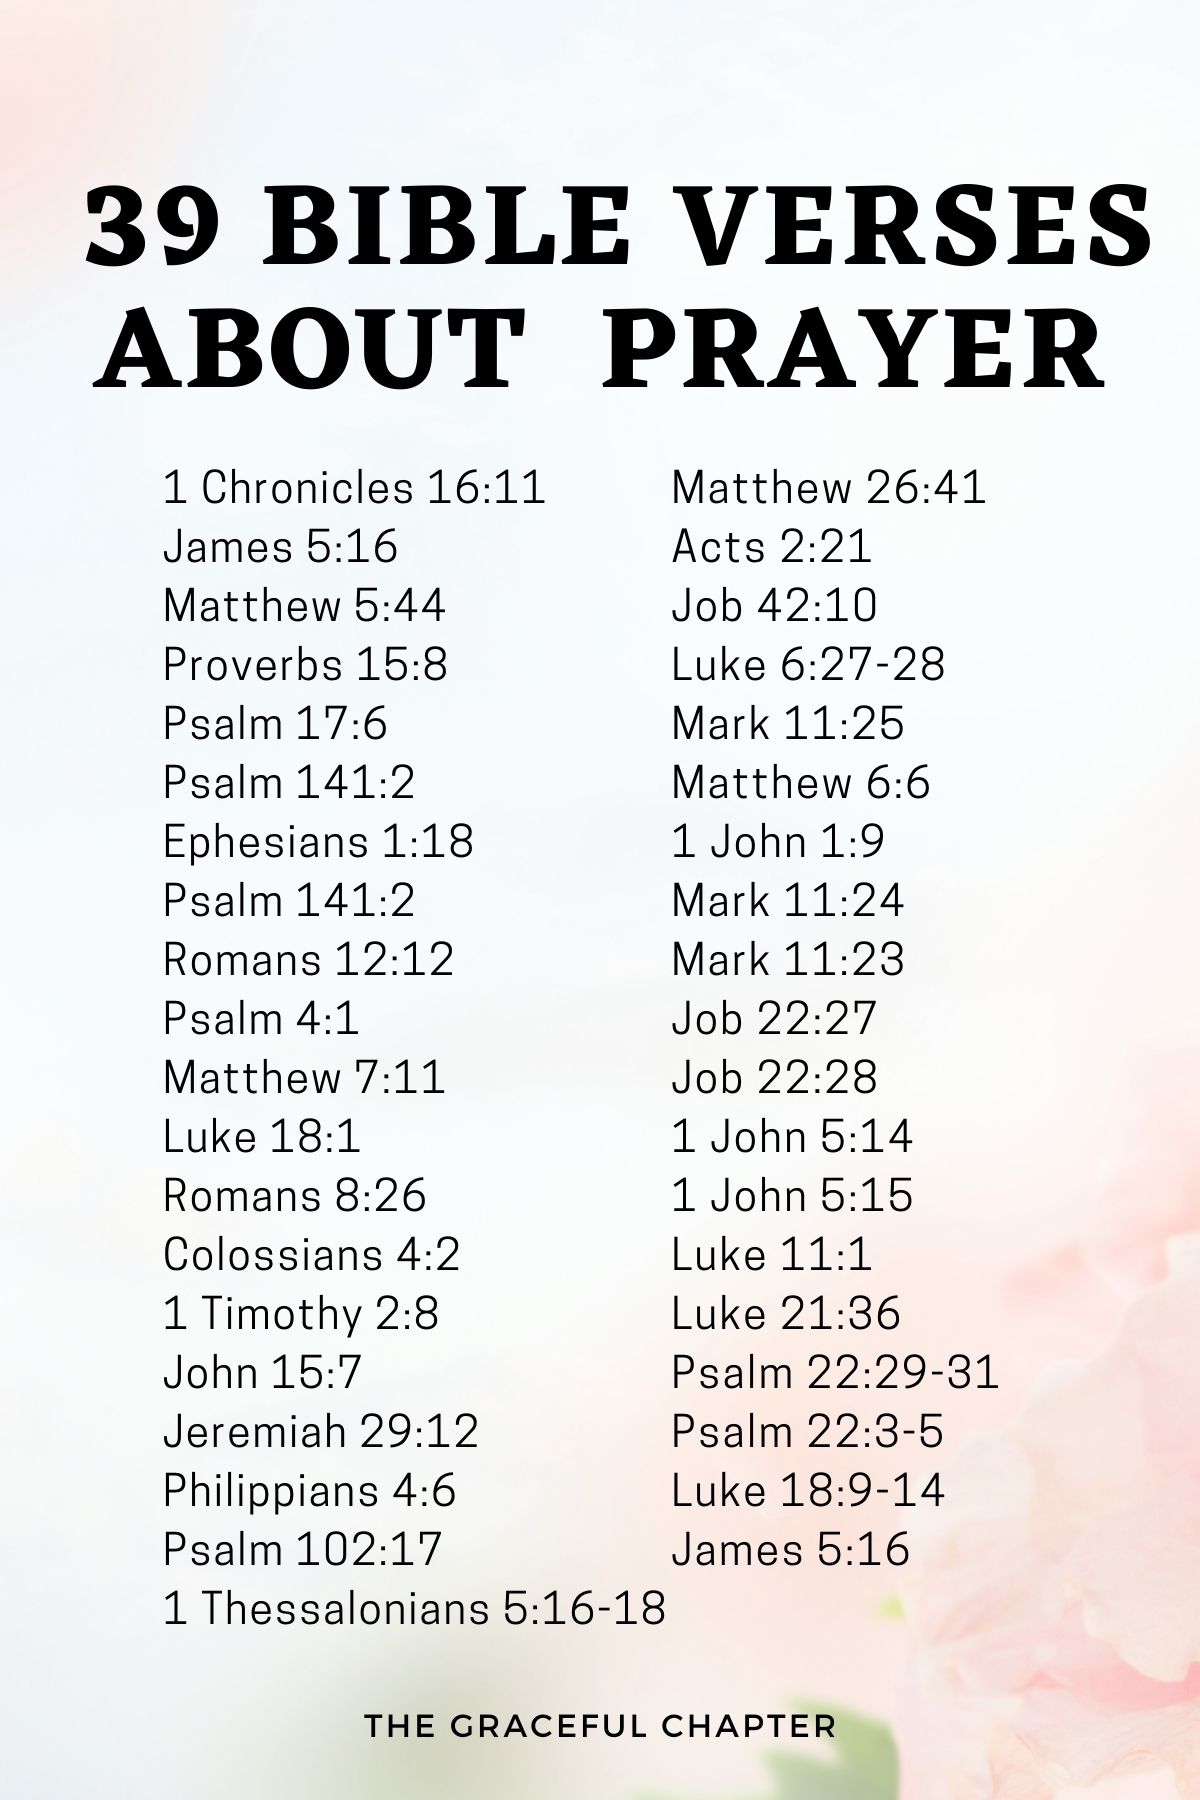 38 bible verses about prayer